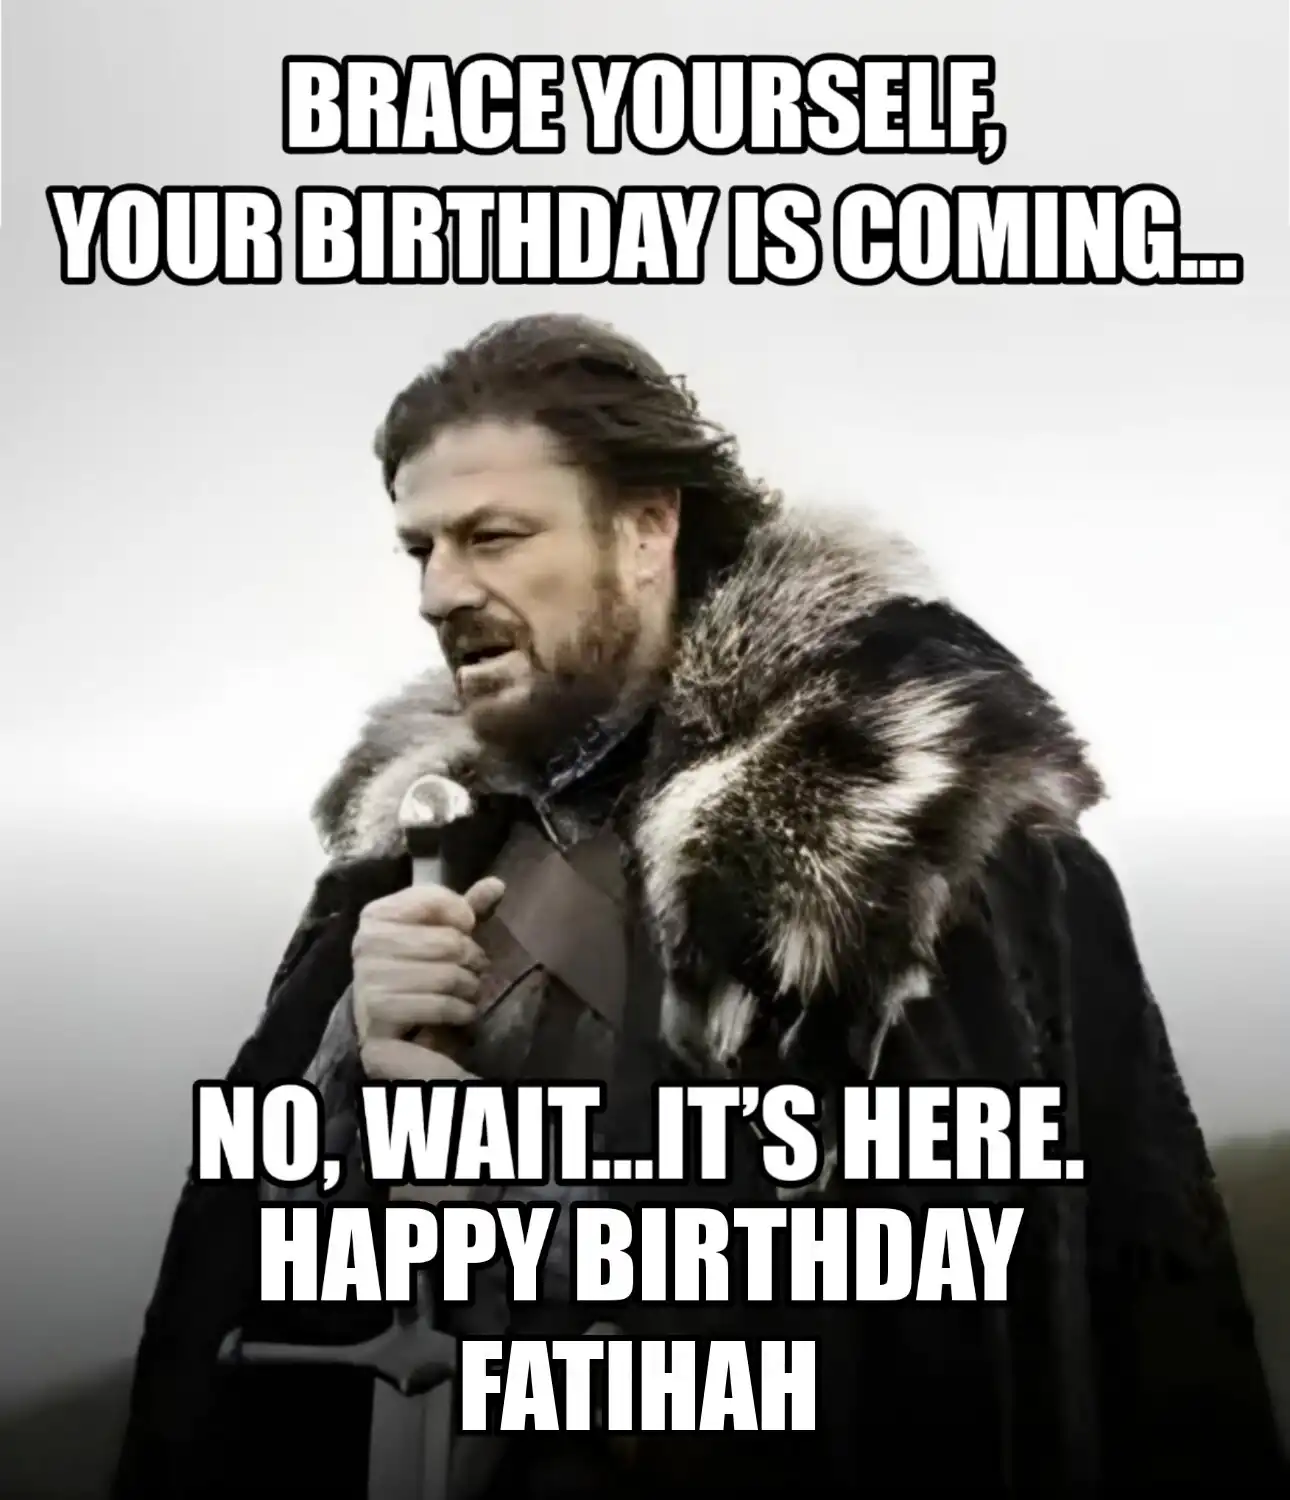 Happy Birthday Fatihah Brace Yourself Your Birthday Is Coming Meme